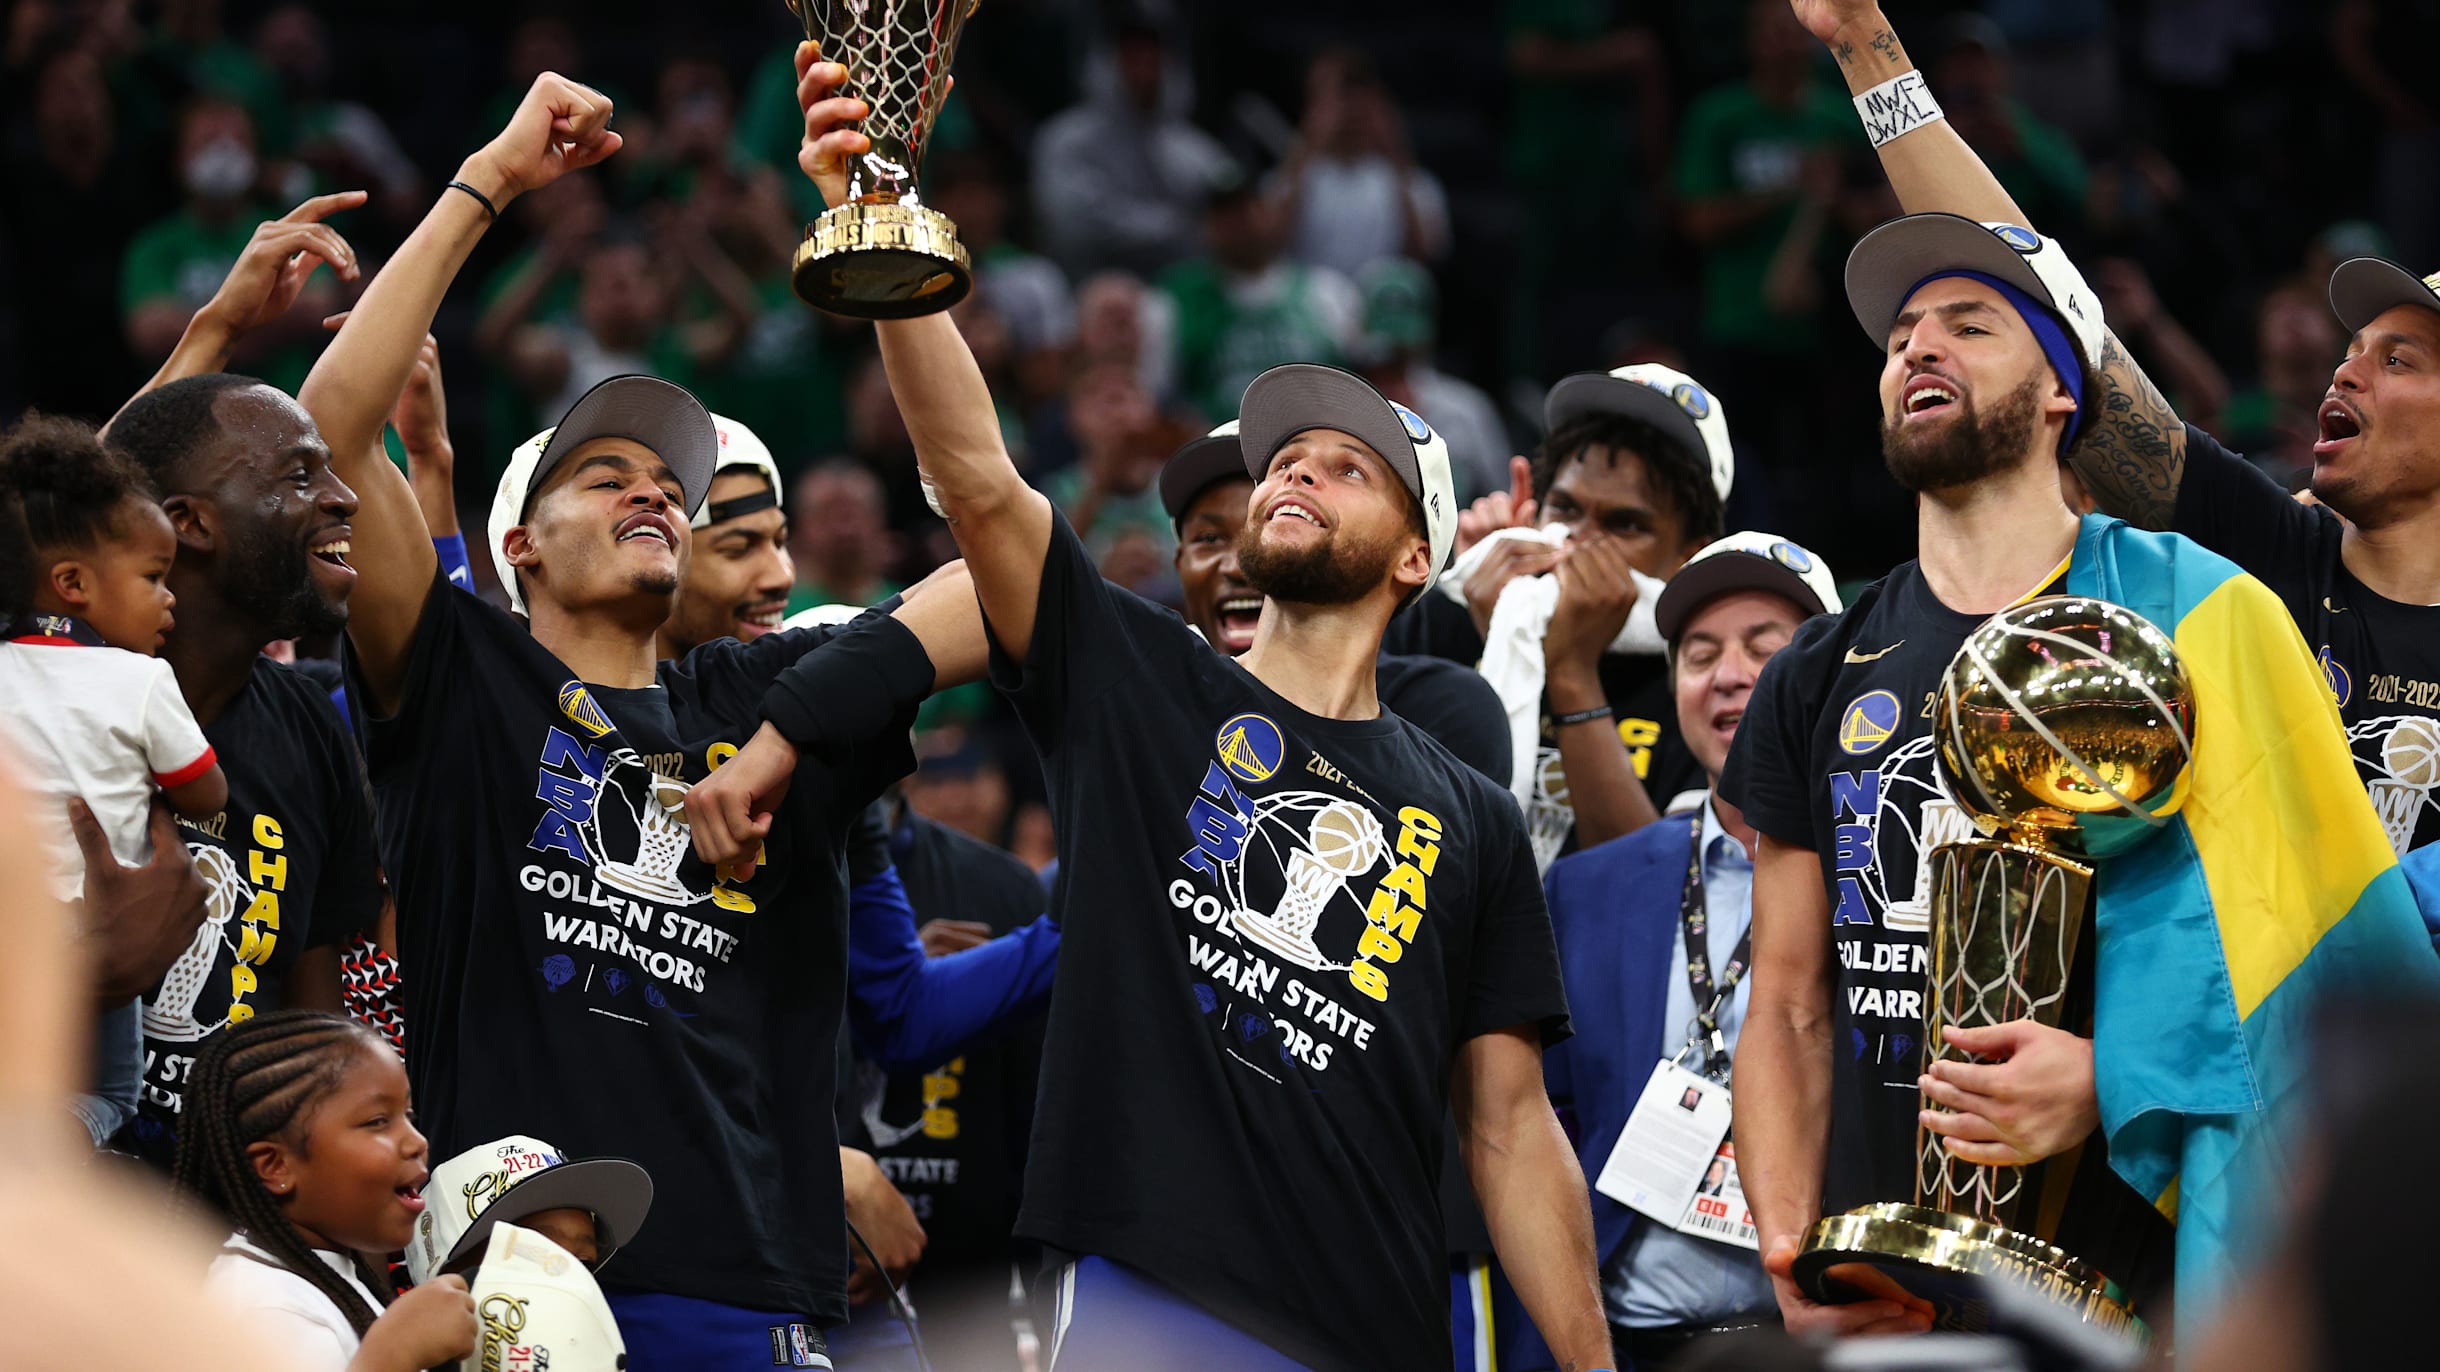 Golden State Warriors 2022 NBA Finals Champions Repeat T-Shirt - T